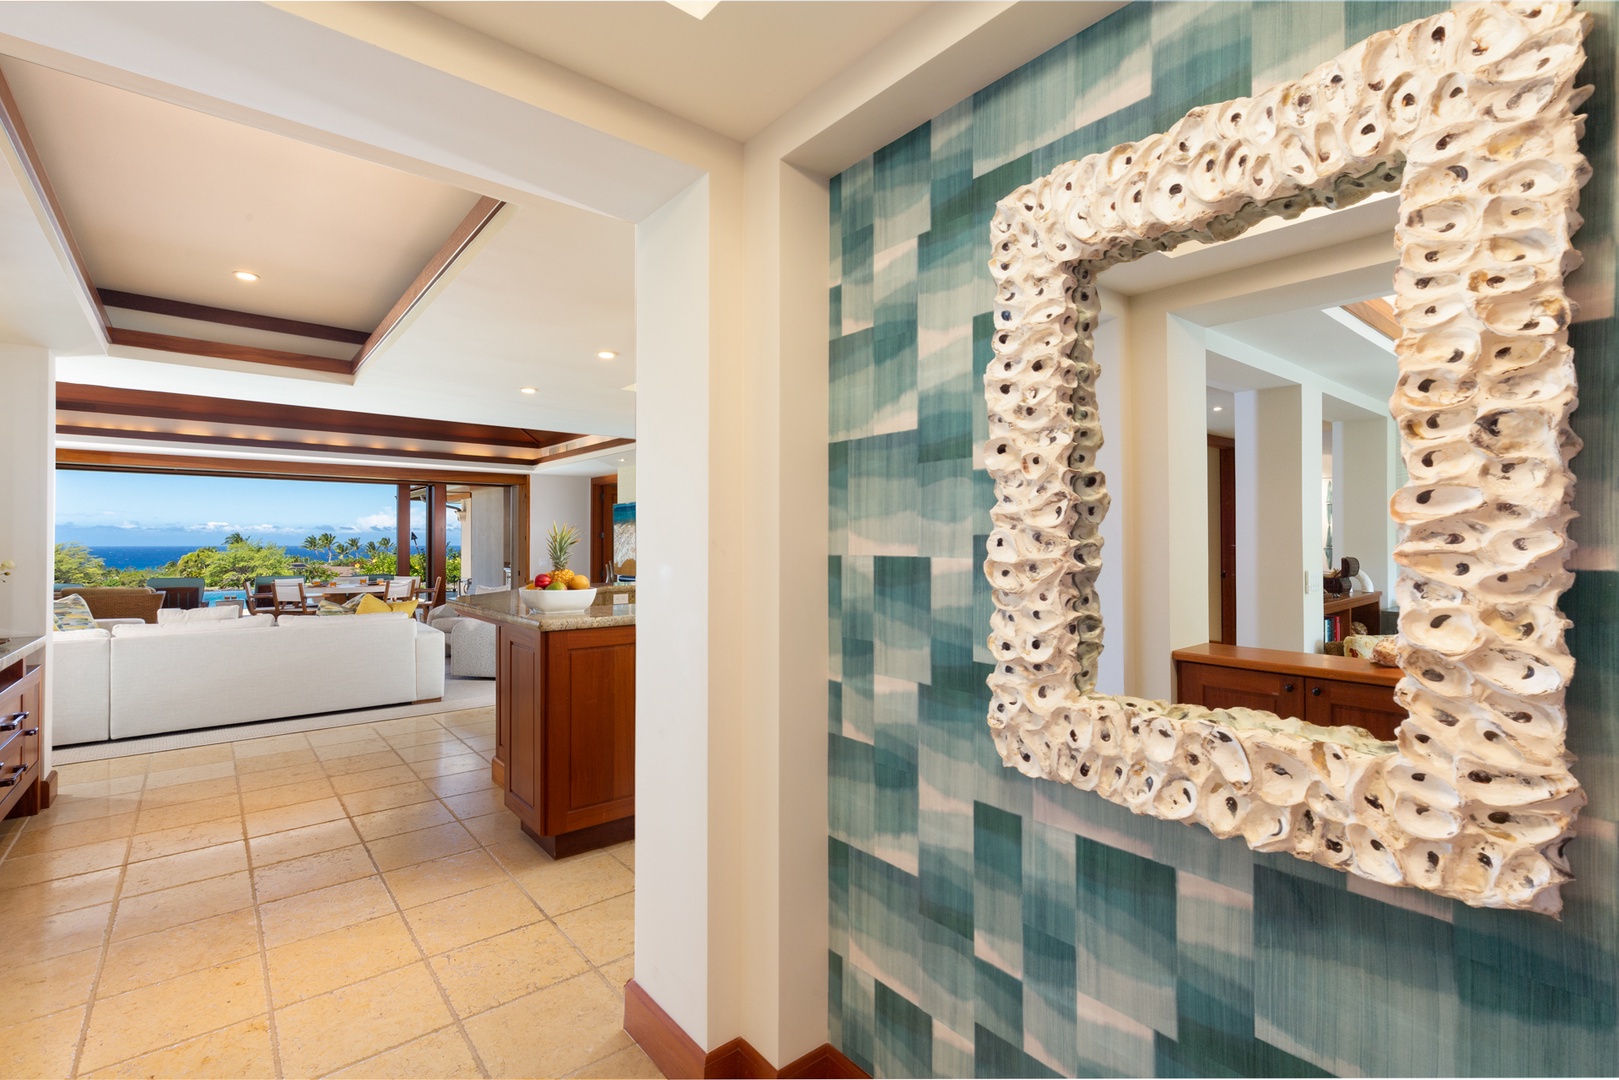 Kailua Kona Vacation Rentals, 4BD Hainoa Estate (102) at Four Seasons Resort at Hualalai - The foyer invites you into stunning architecture & serene interior design